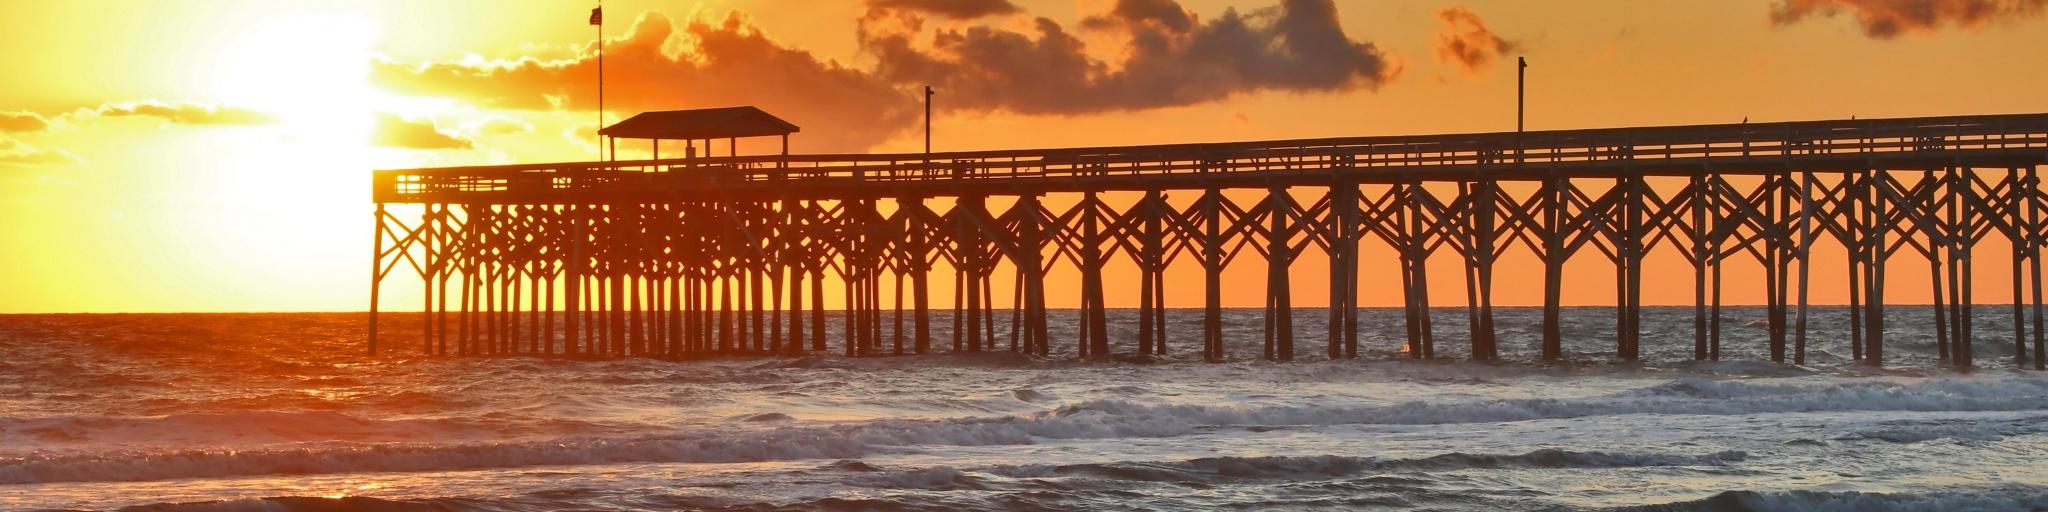 Myrtle Beach, South Carolina, USA with a golden sunrise over calm Atlantic ocean beach with wooden pier. 